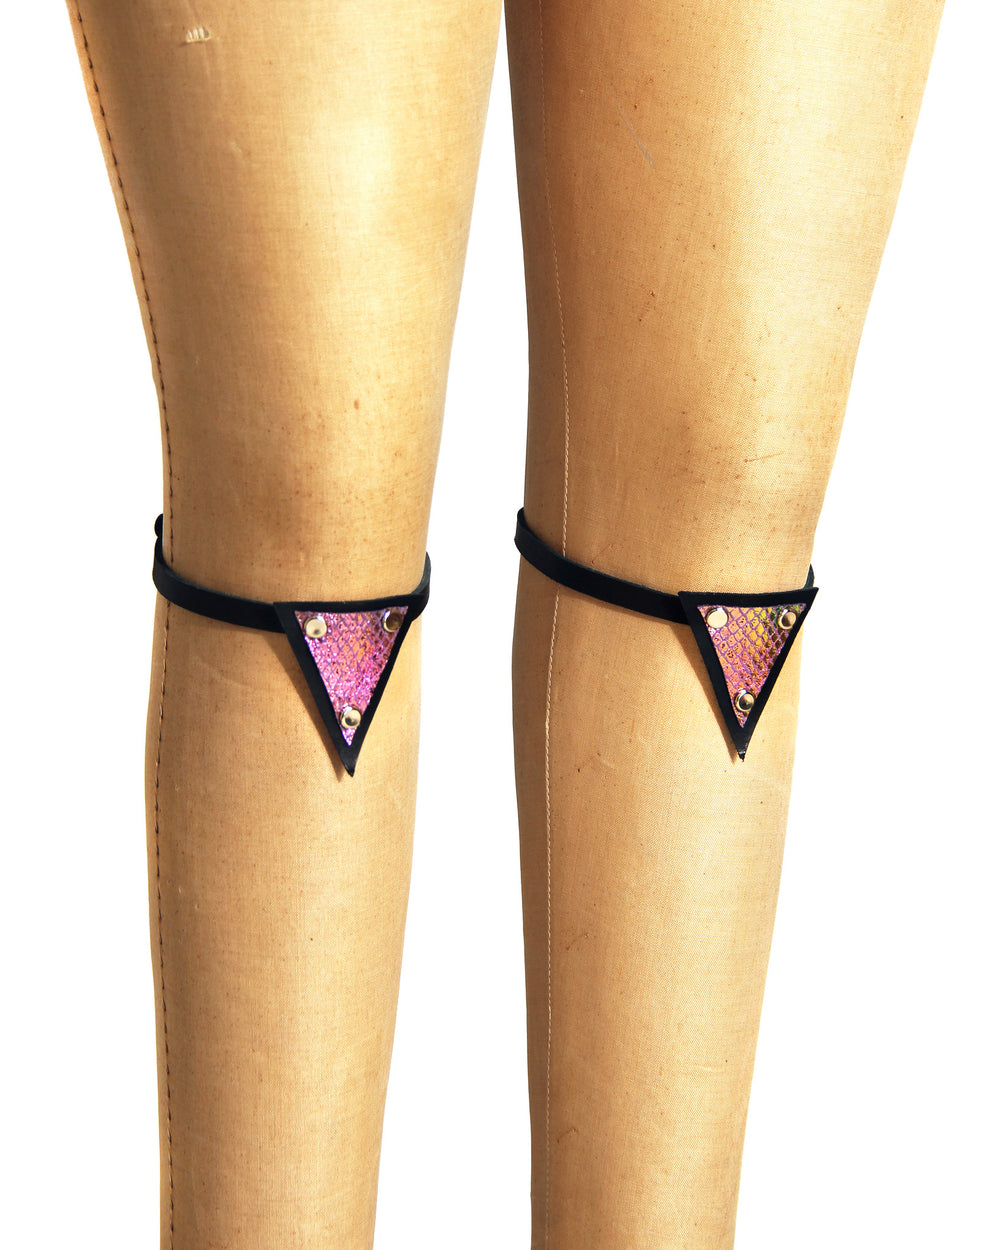 Close up of Trianthem knee triangle harness